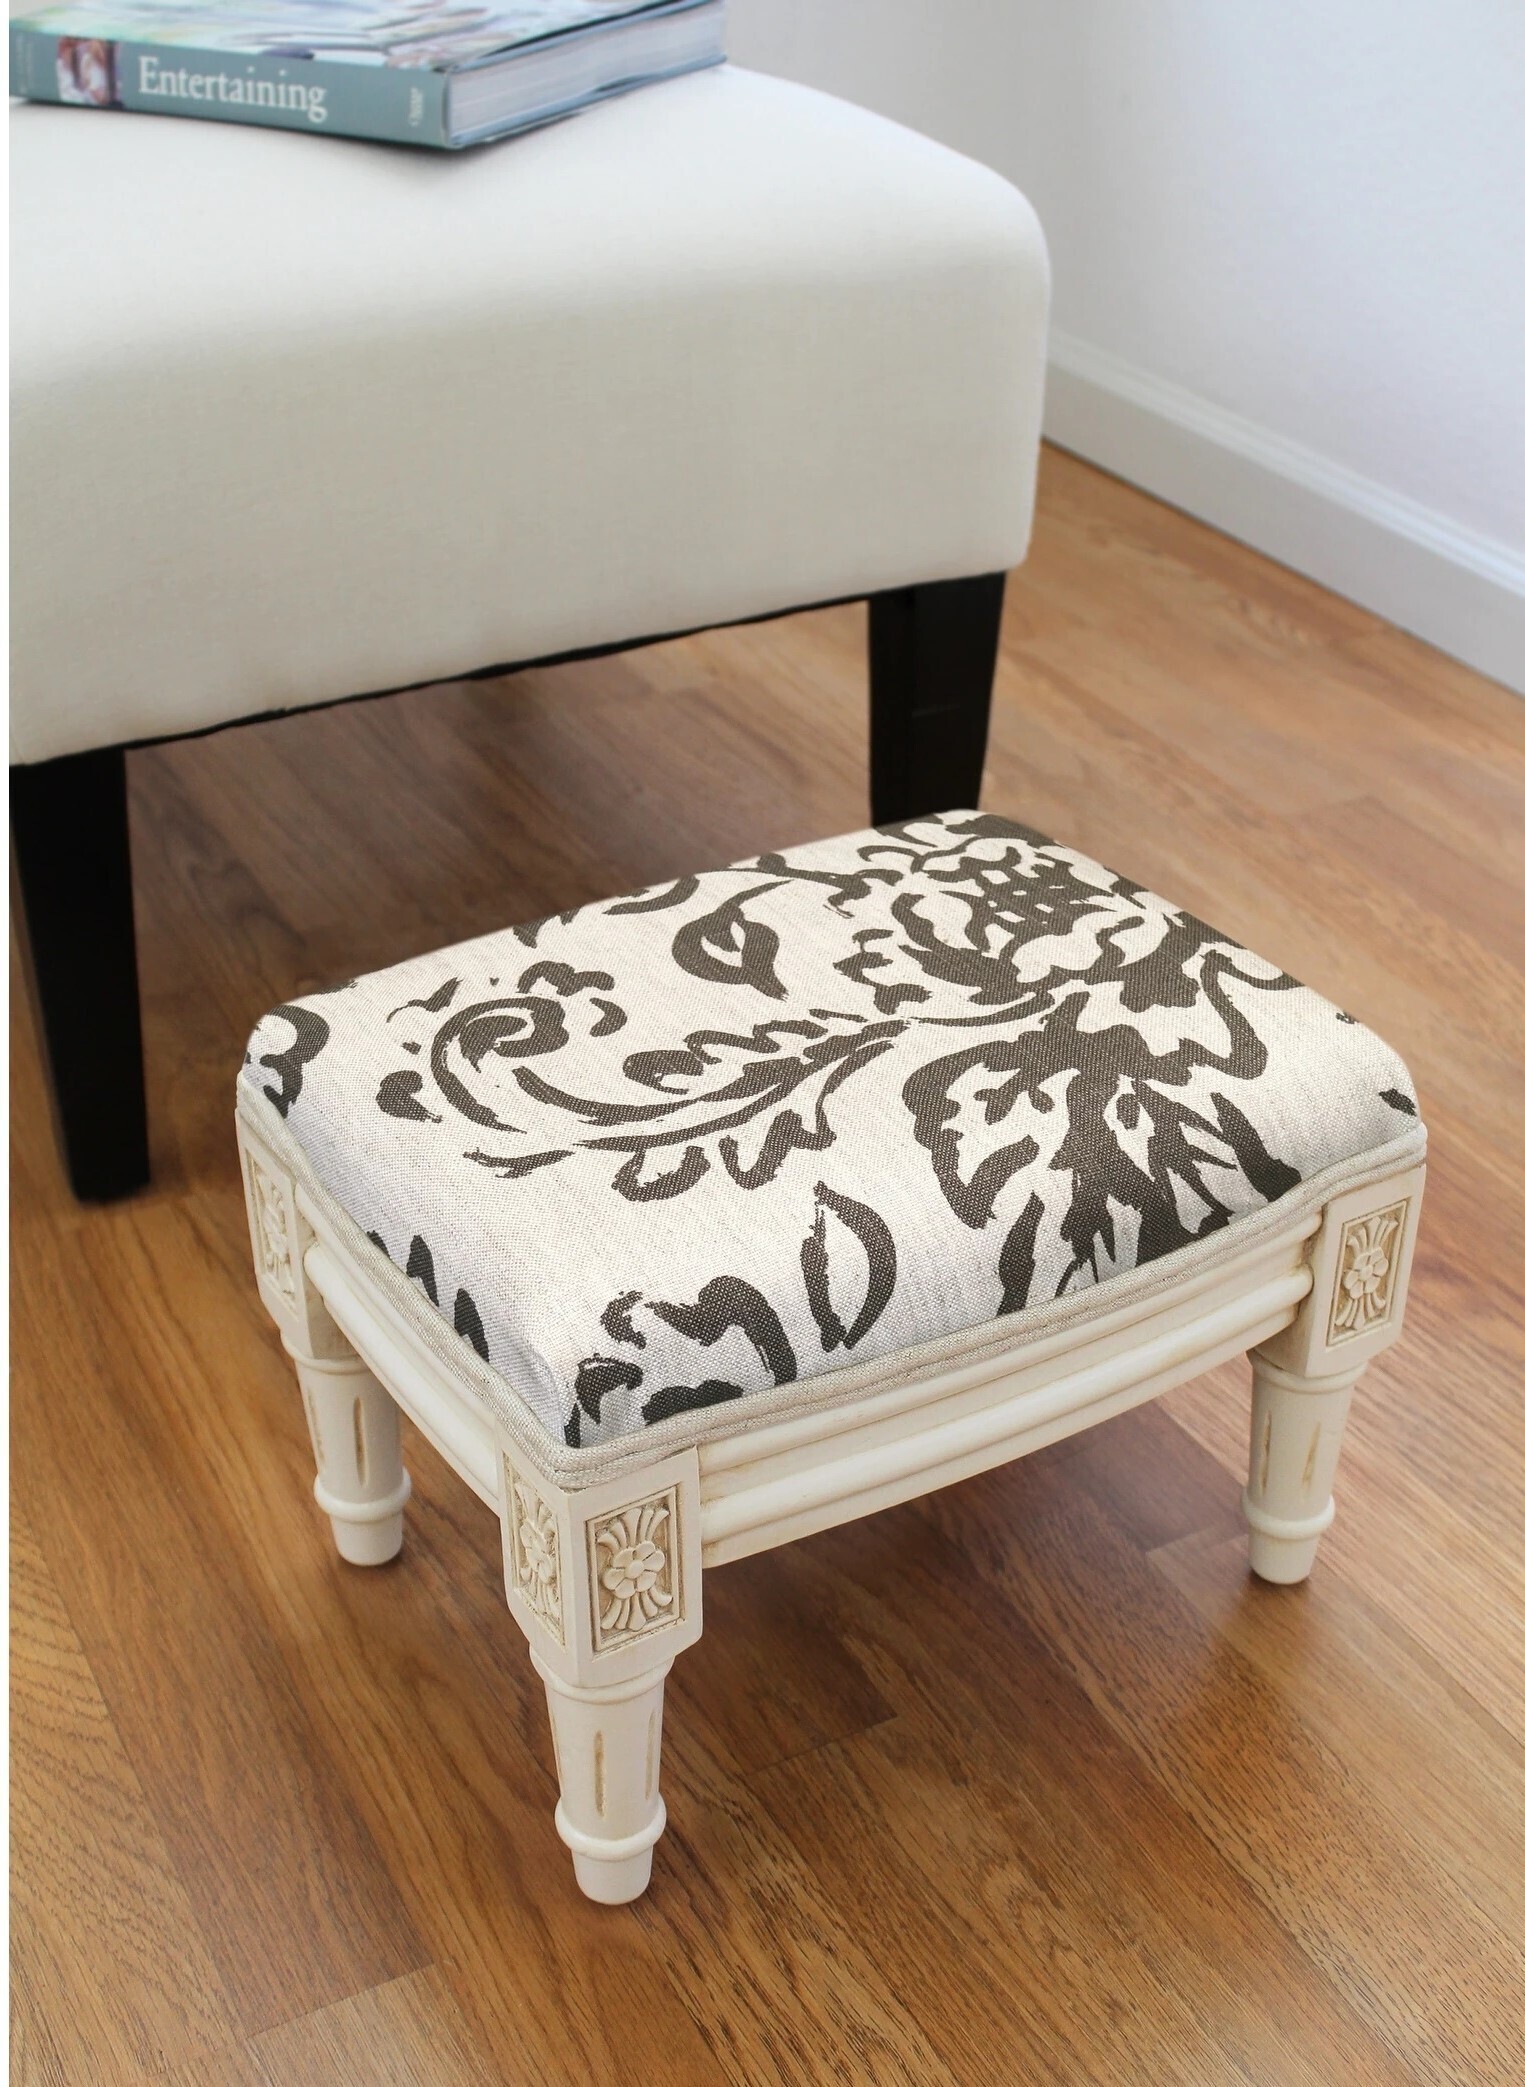 Ornate low foot stool